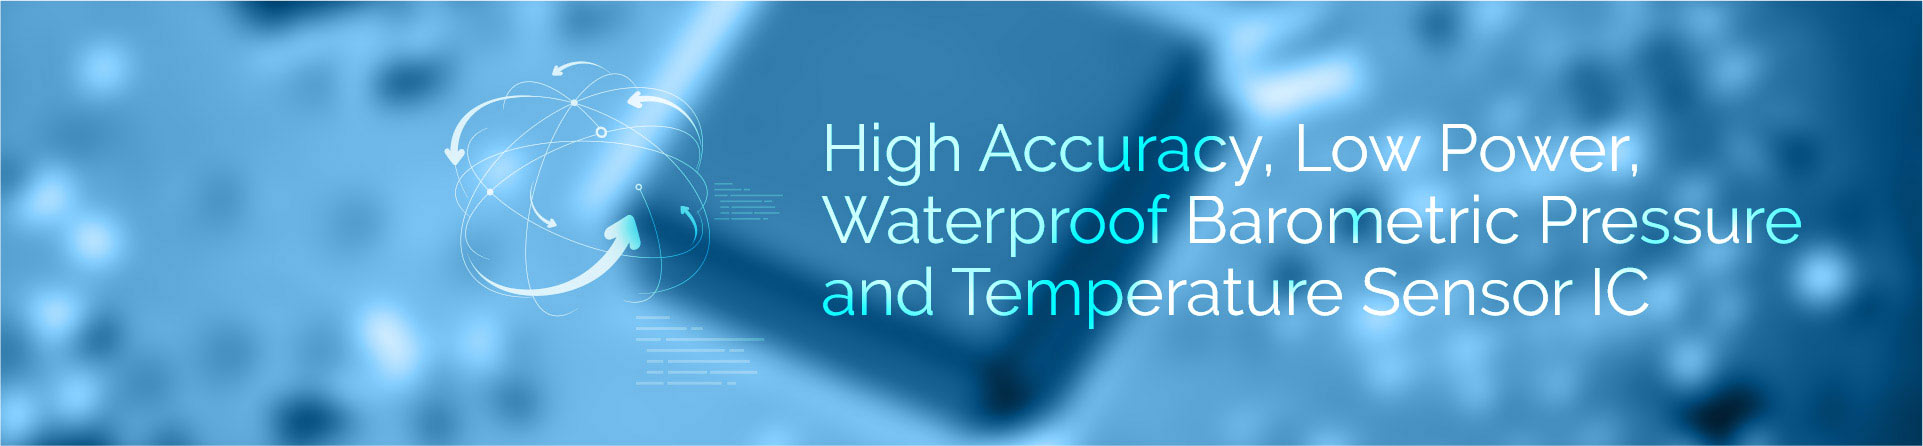 ICP-101xx: High Accuracy, Low Power, Waterproof Barometric Pressure and Temperature Sensor IC